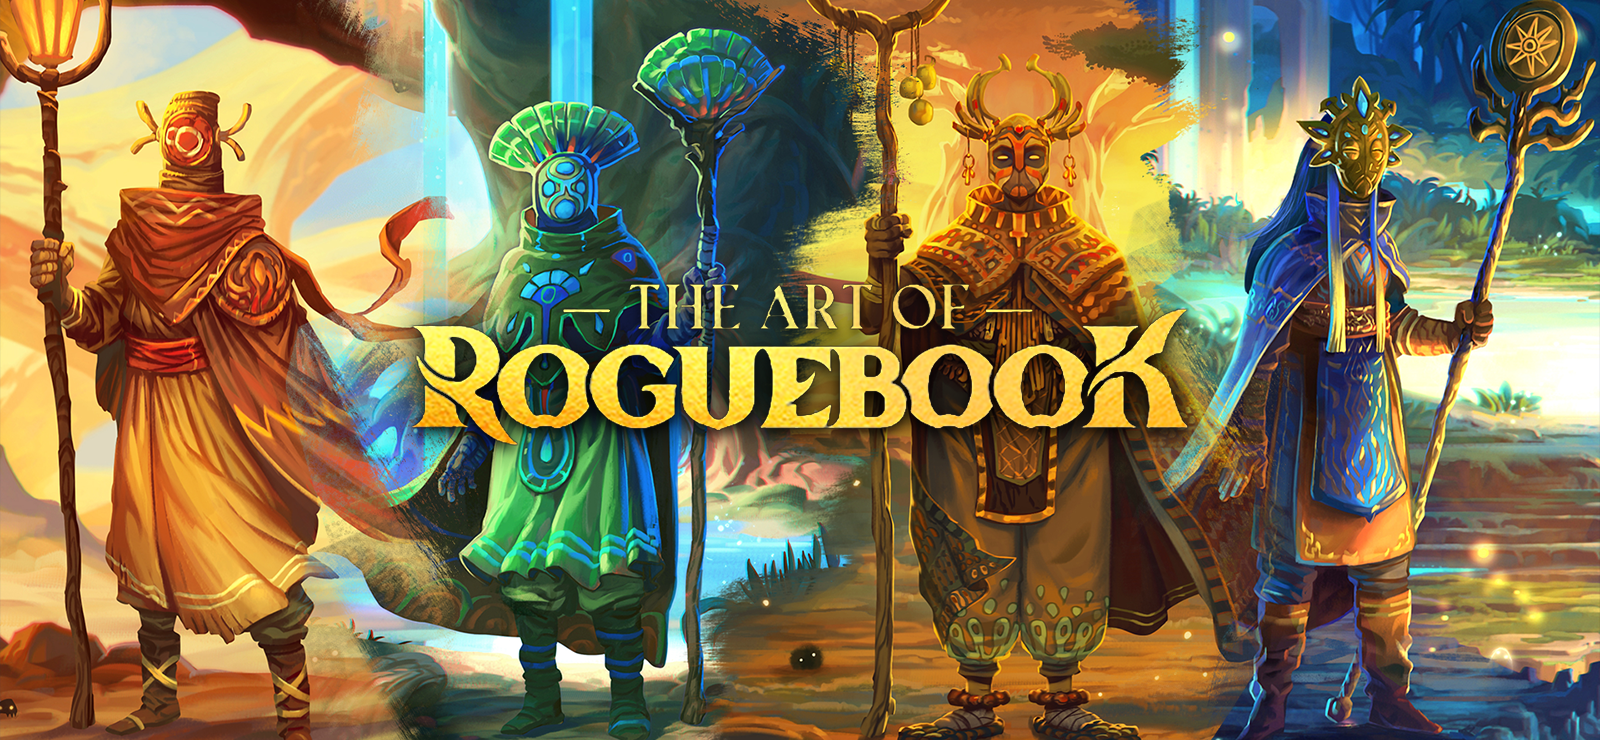 Roguebook - The Art Of Roguebook